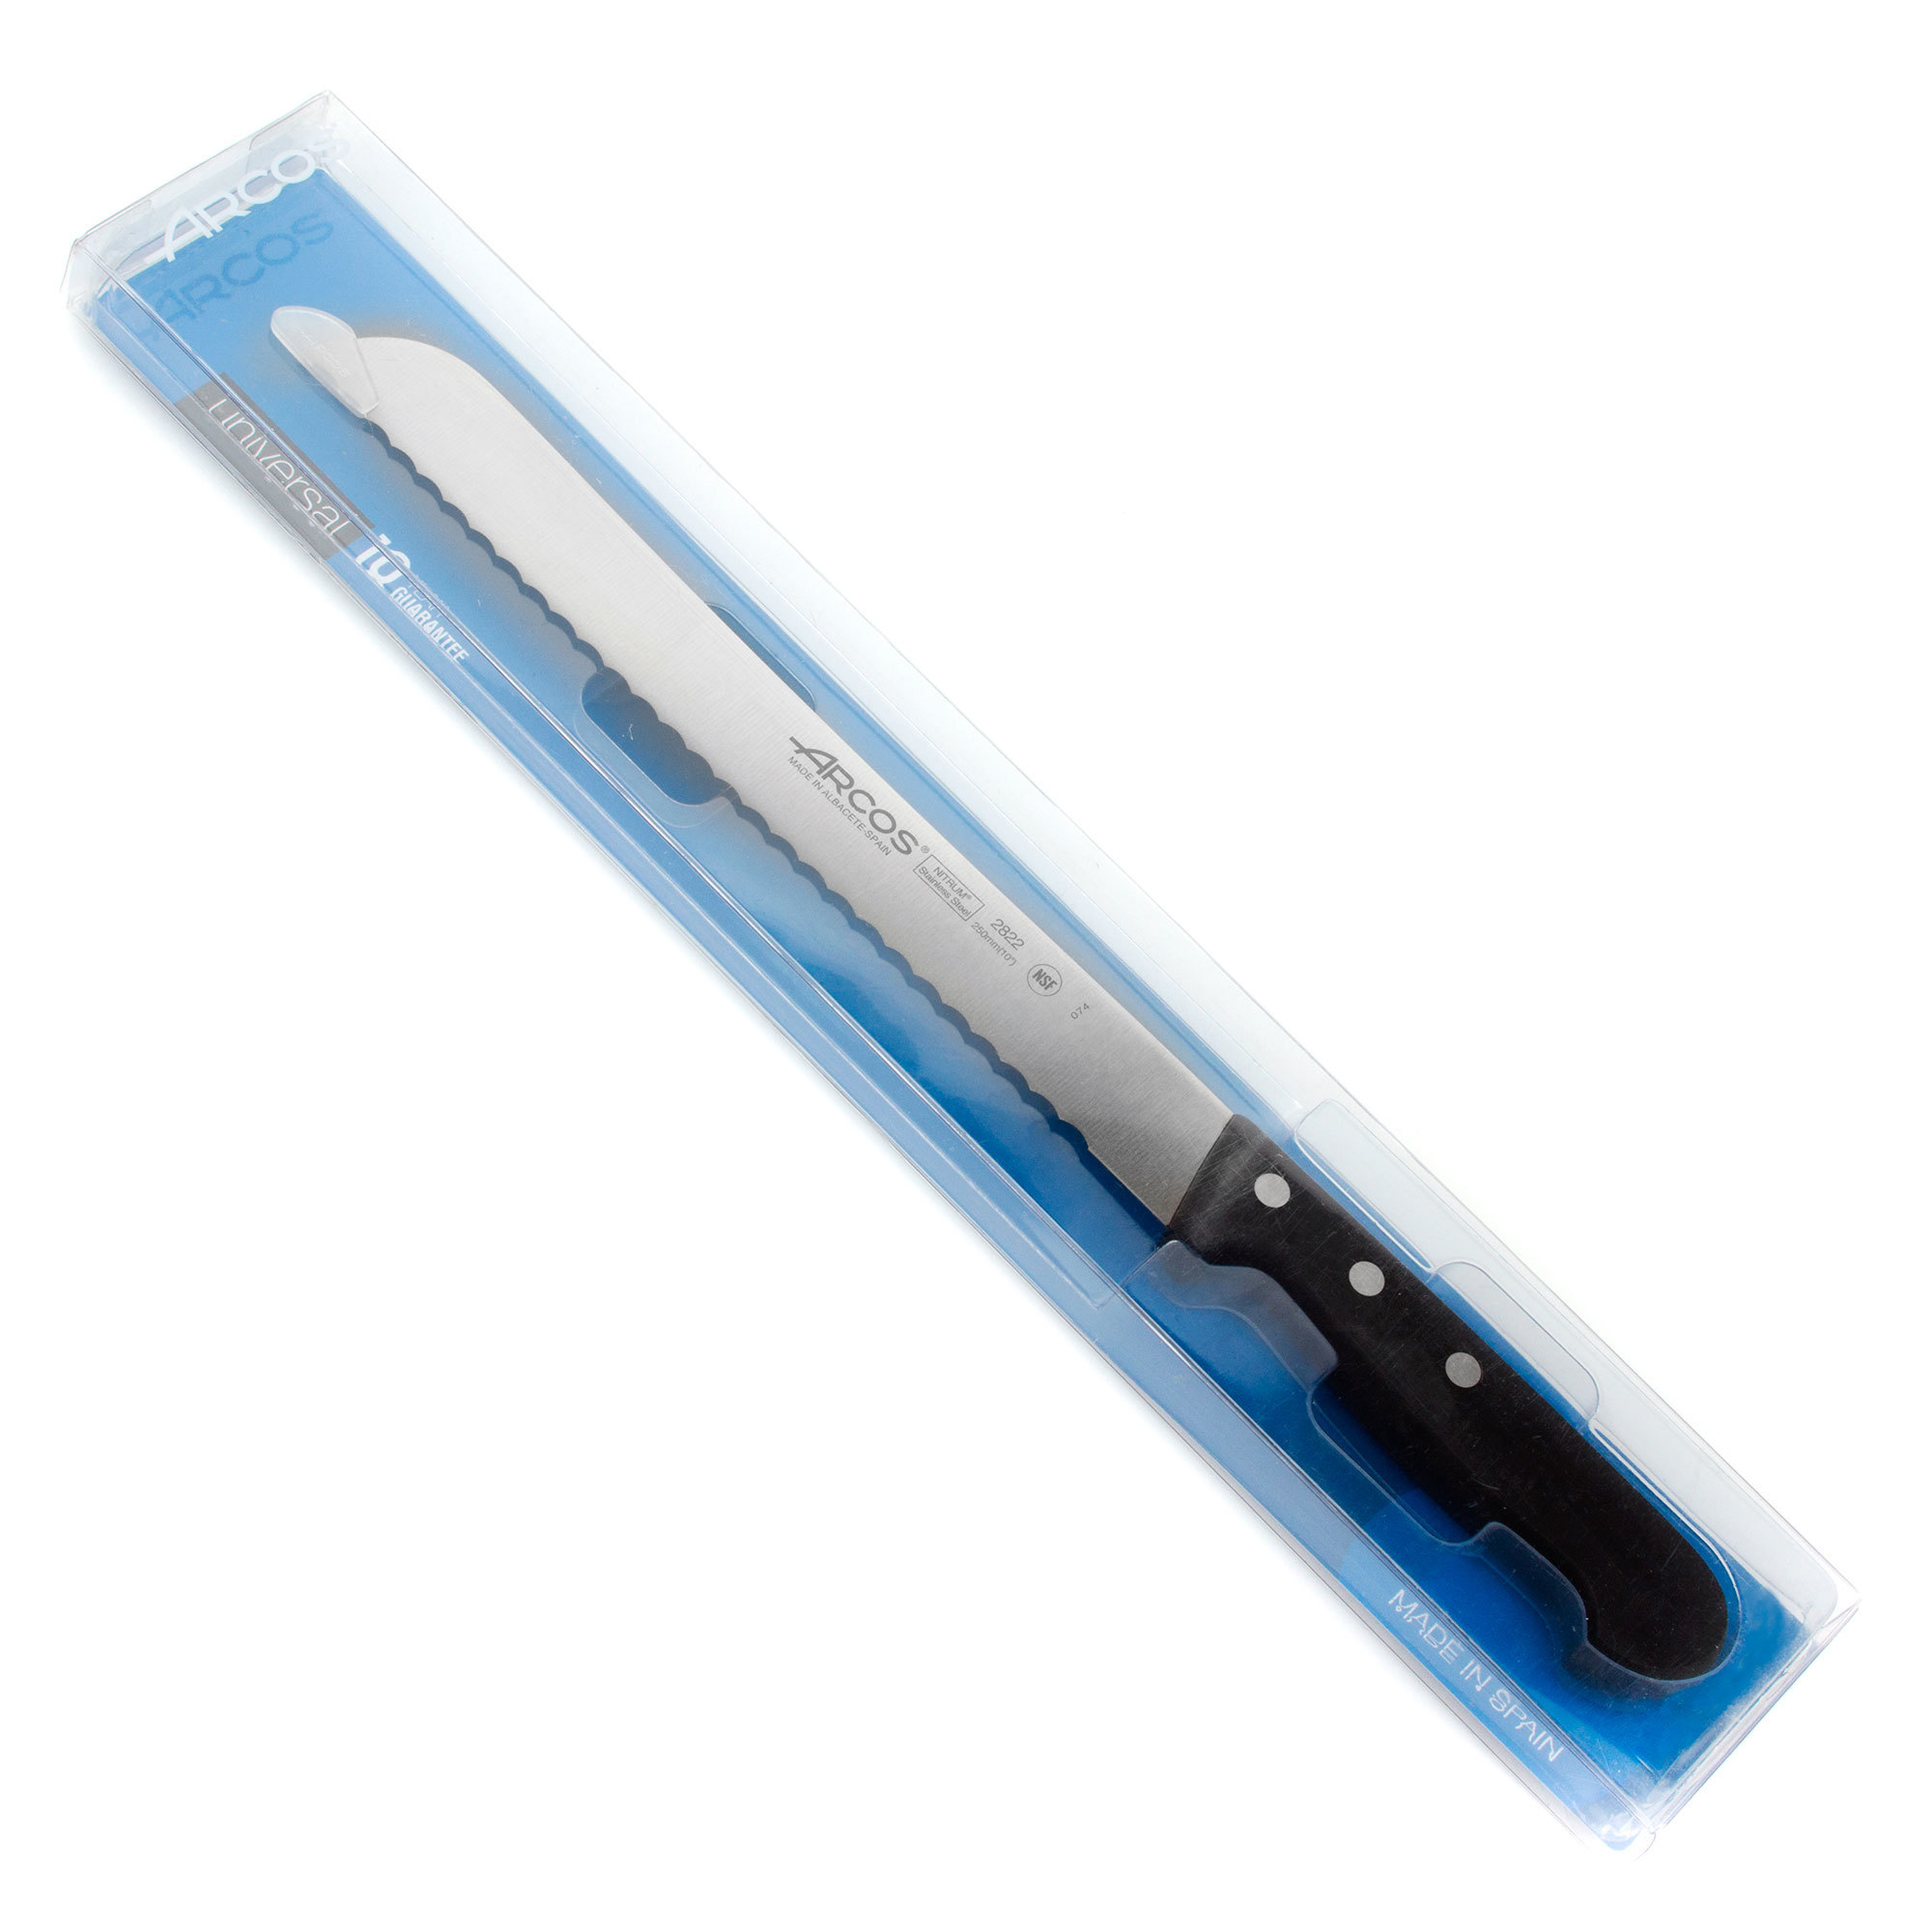 Нож кухонный для хлеба 25 см ARCOS Universal арт. 2822-B